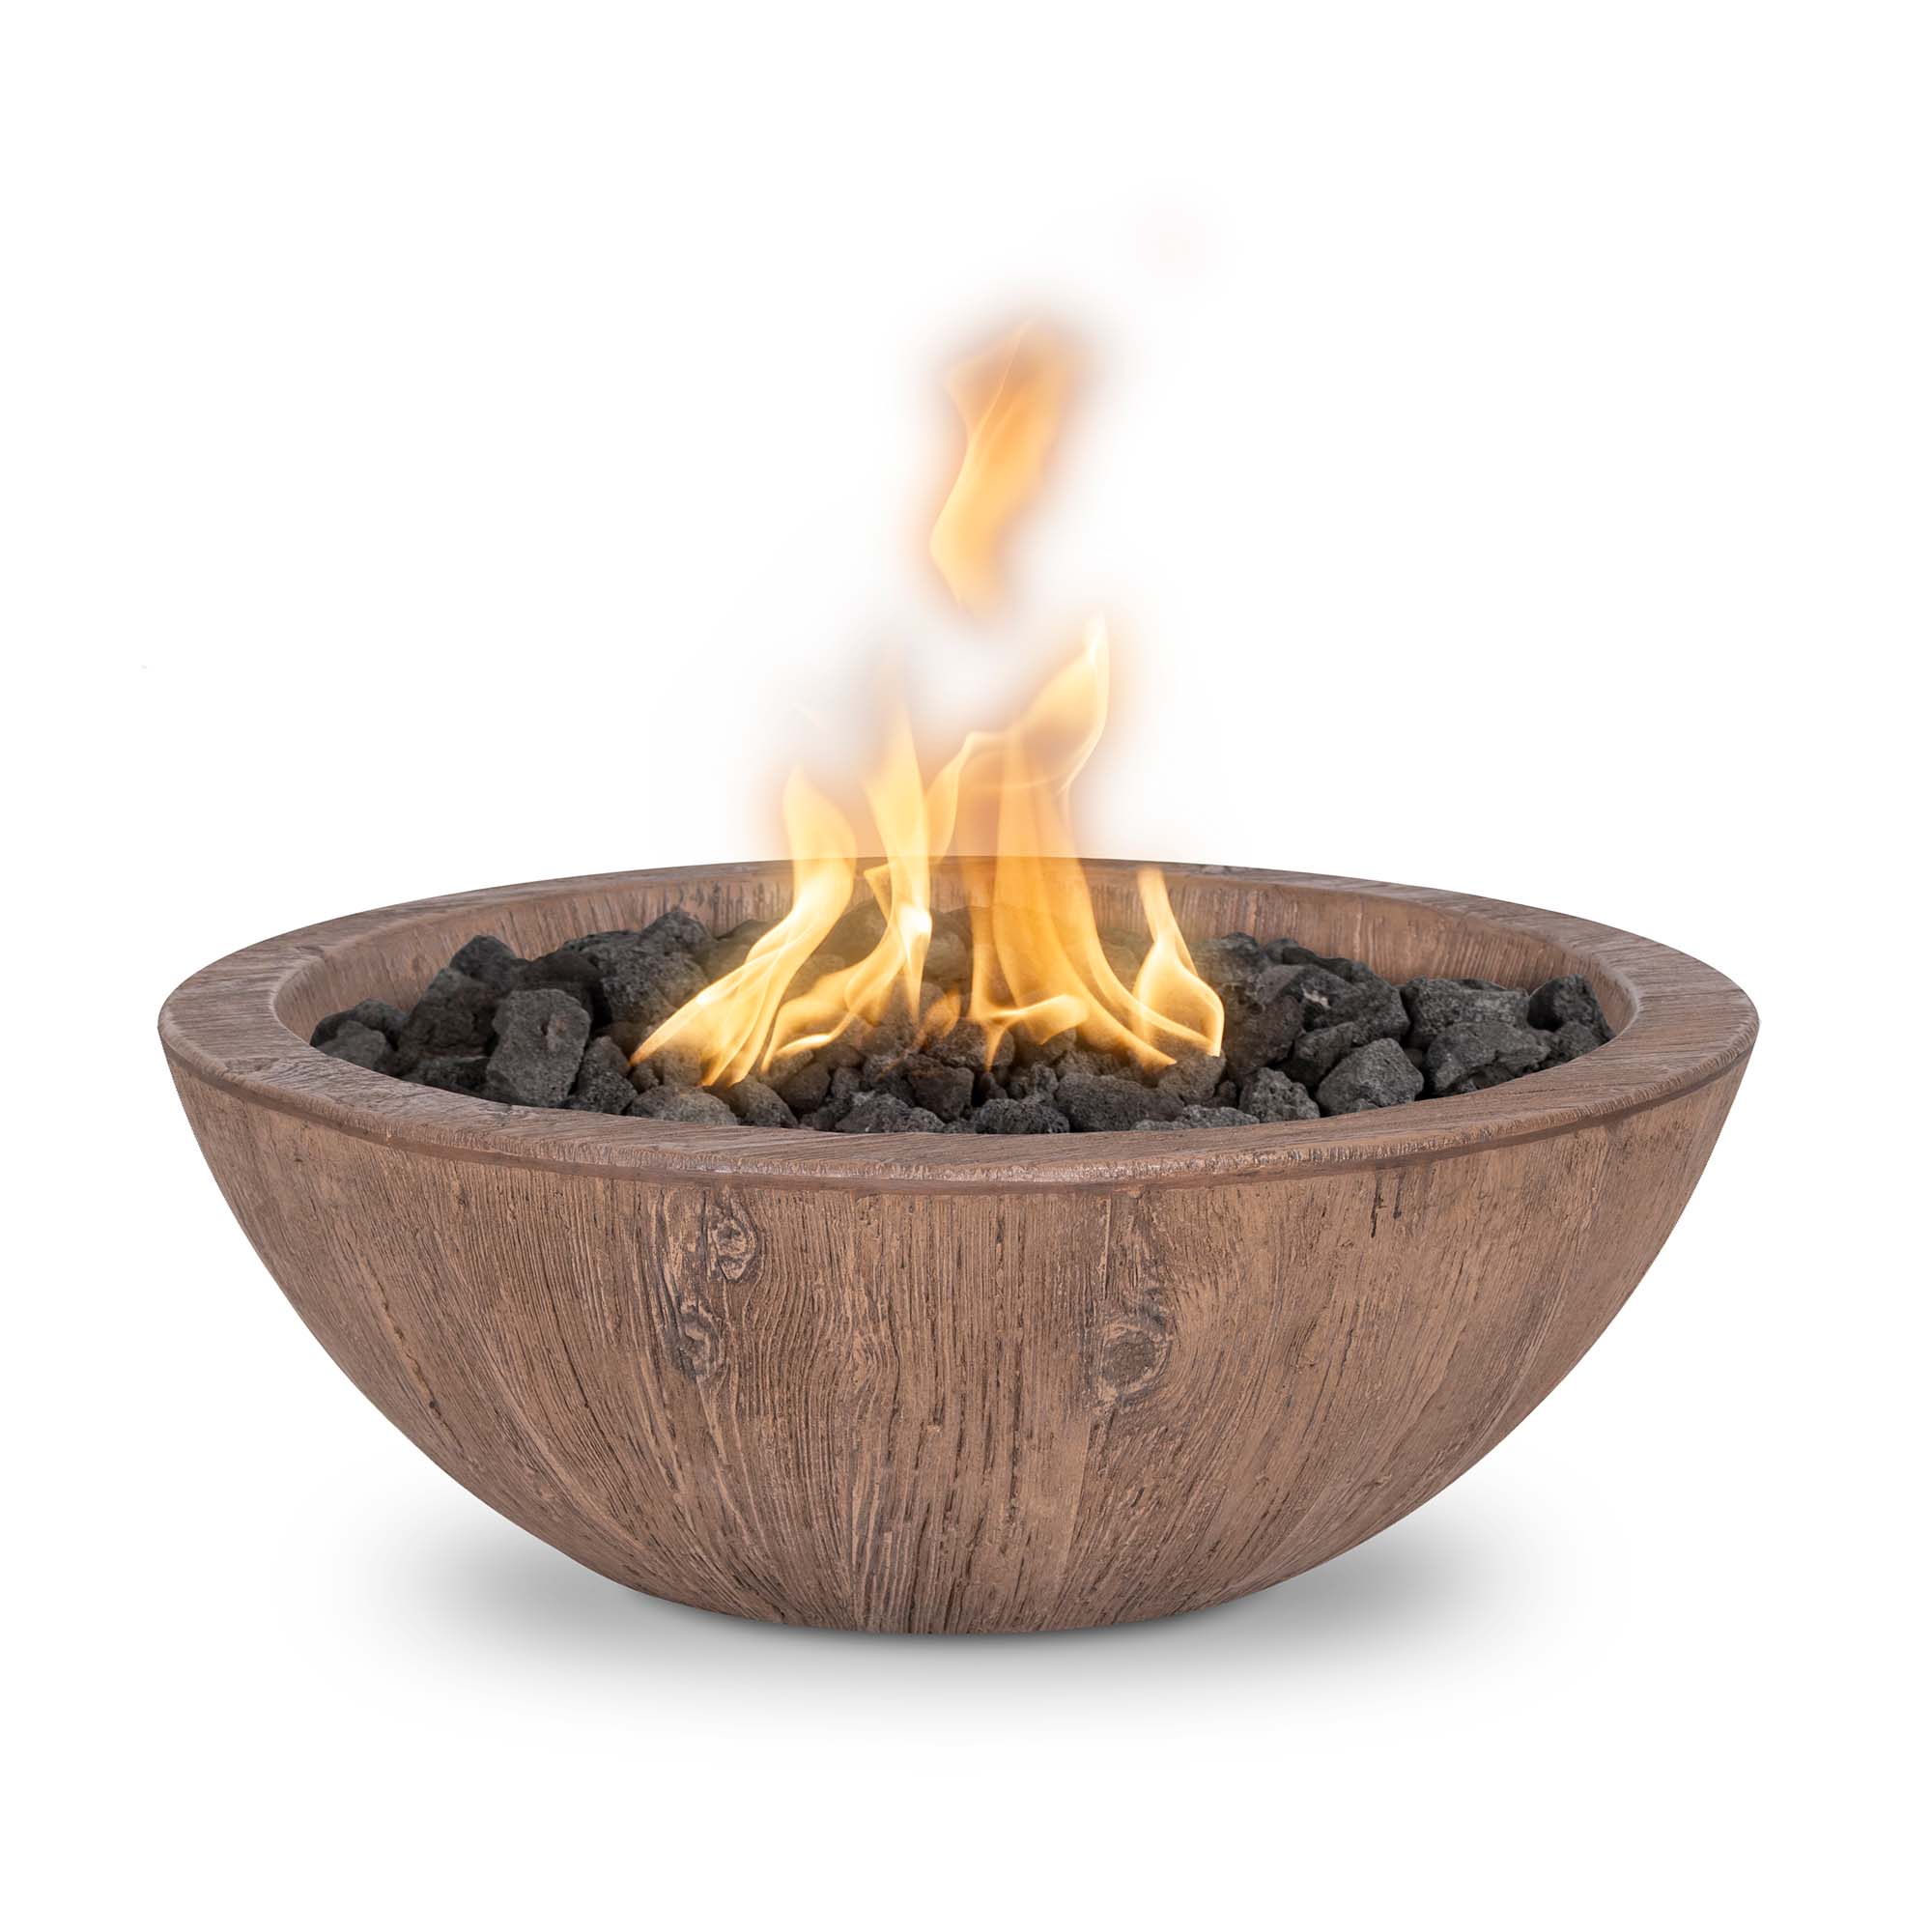 The Outdoor Plus Sedona Fire Bowl Wood Grain Concrete